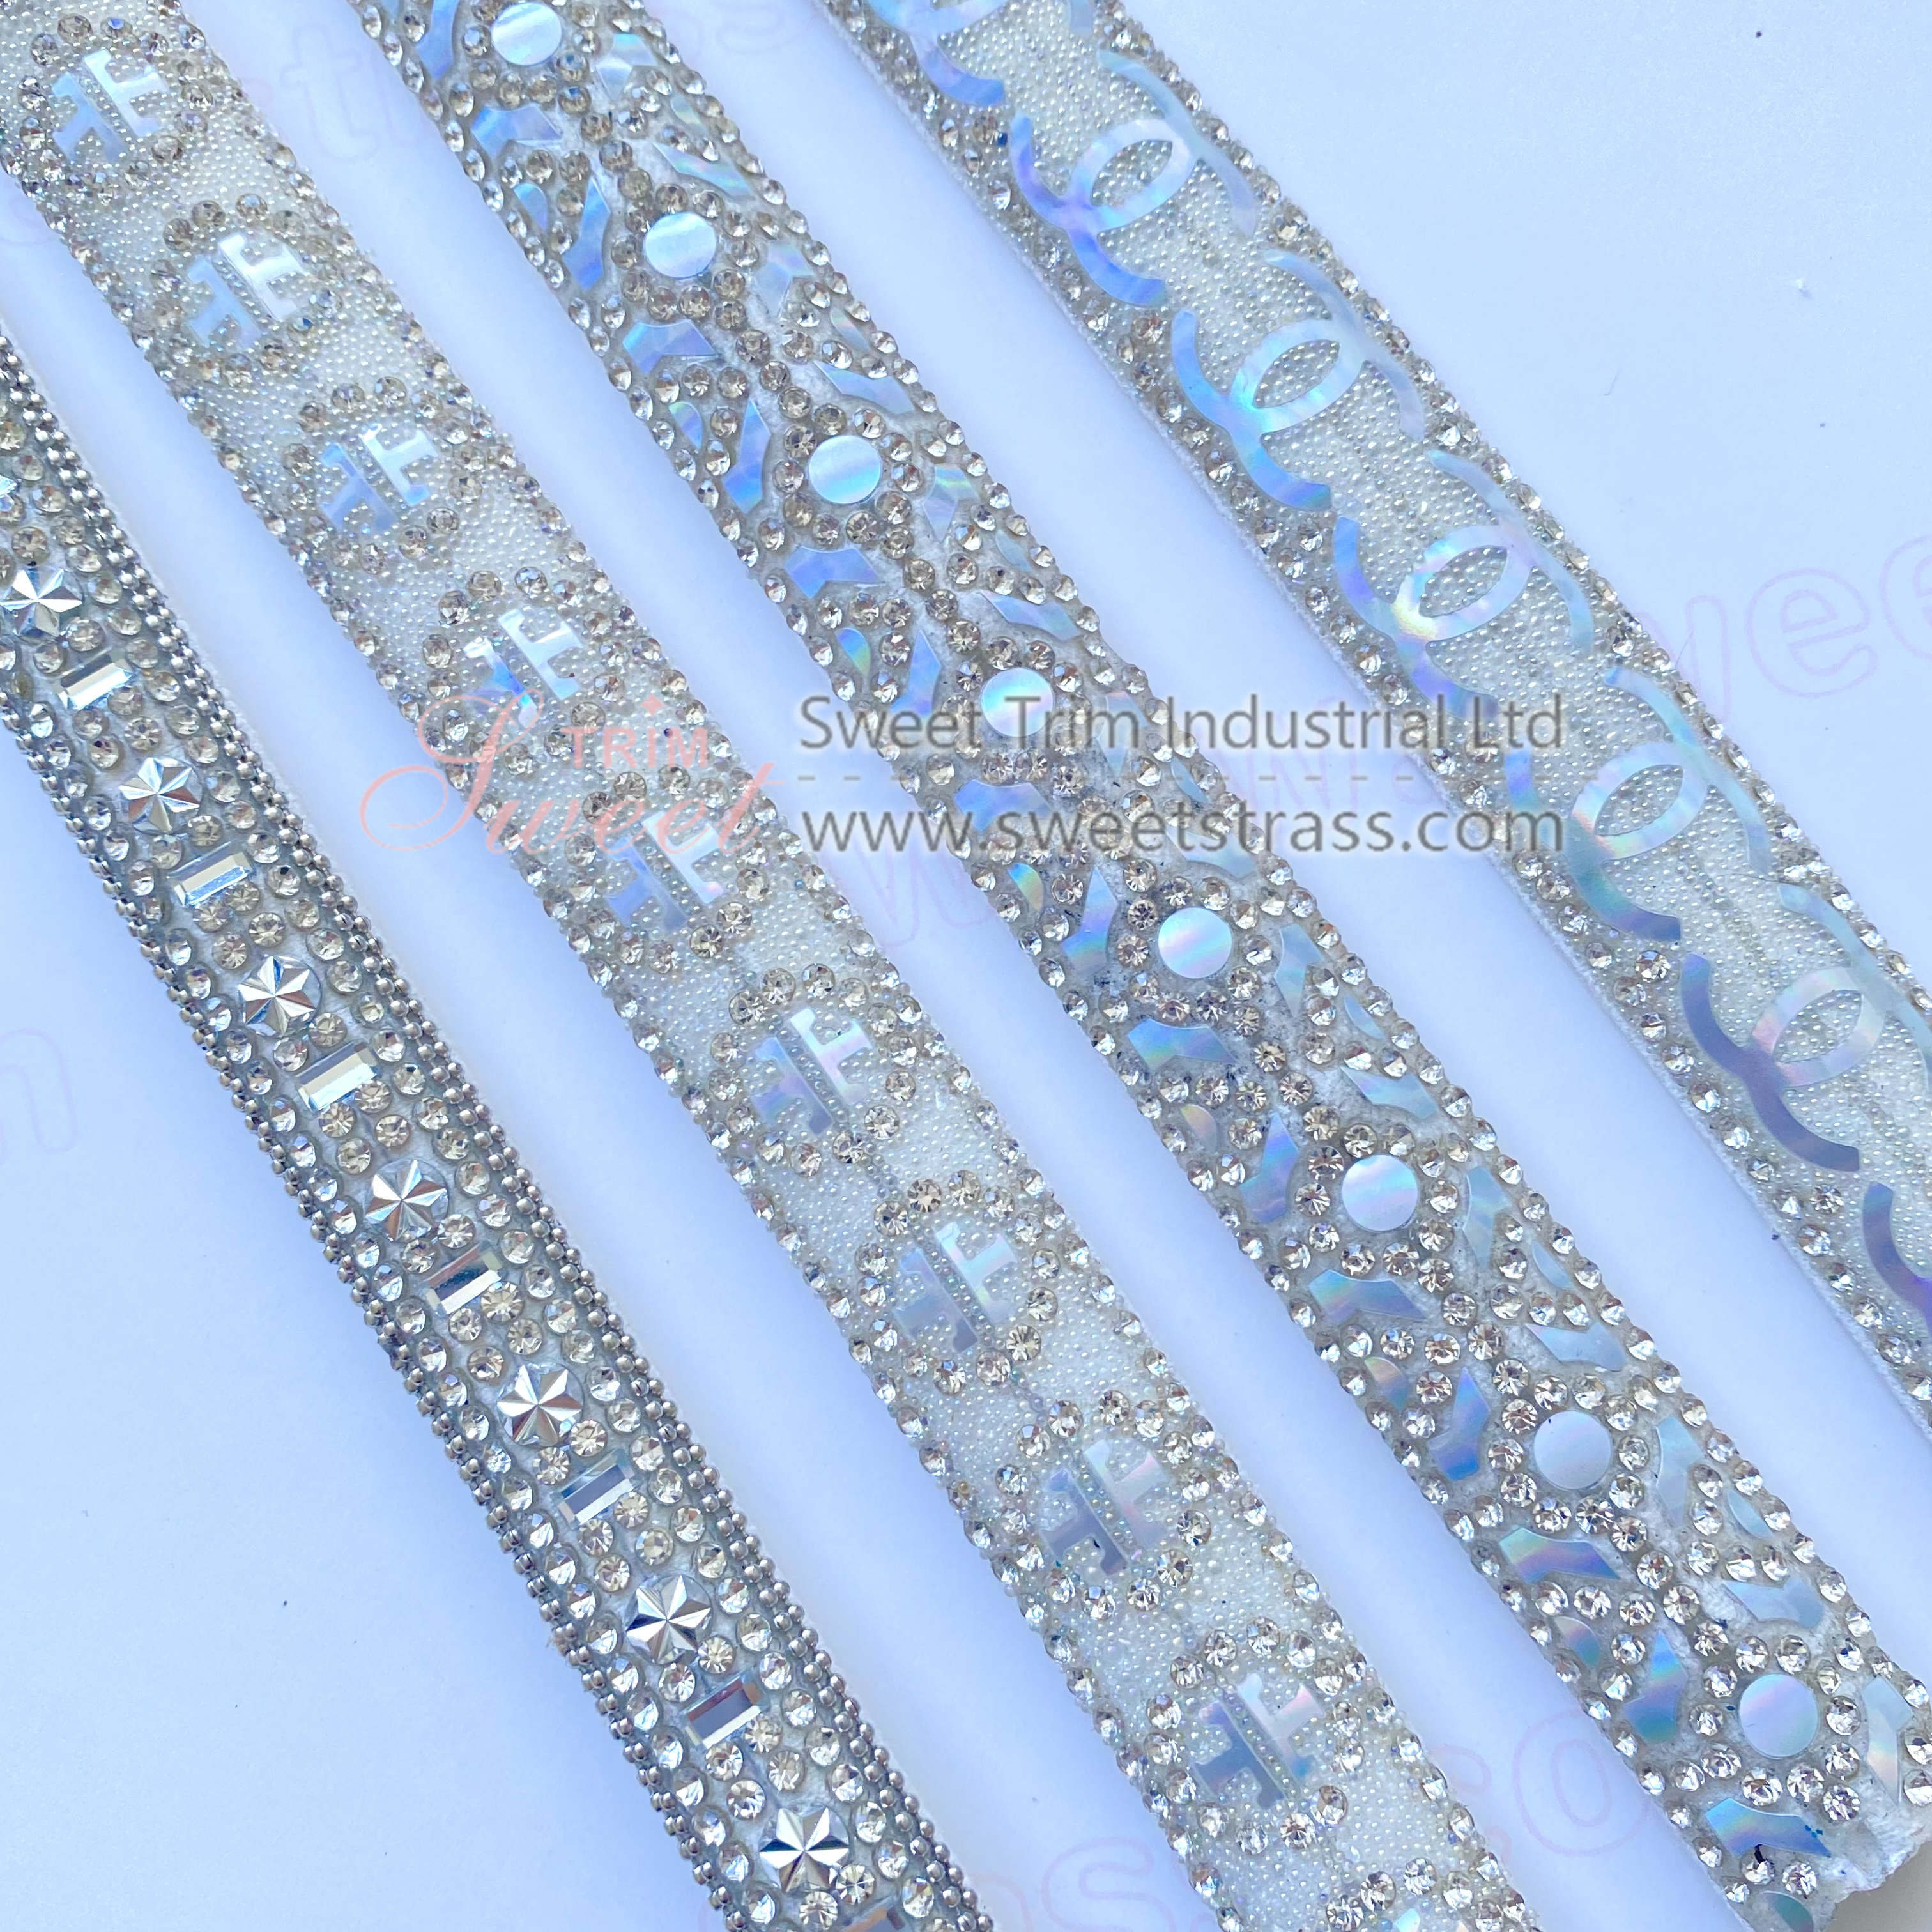 Direct Selling Hot-Fix Crystal Rhinestone Tube Hoodie Sweatpants Diamond Rope with metal tips